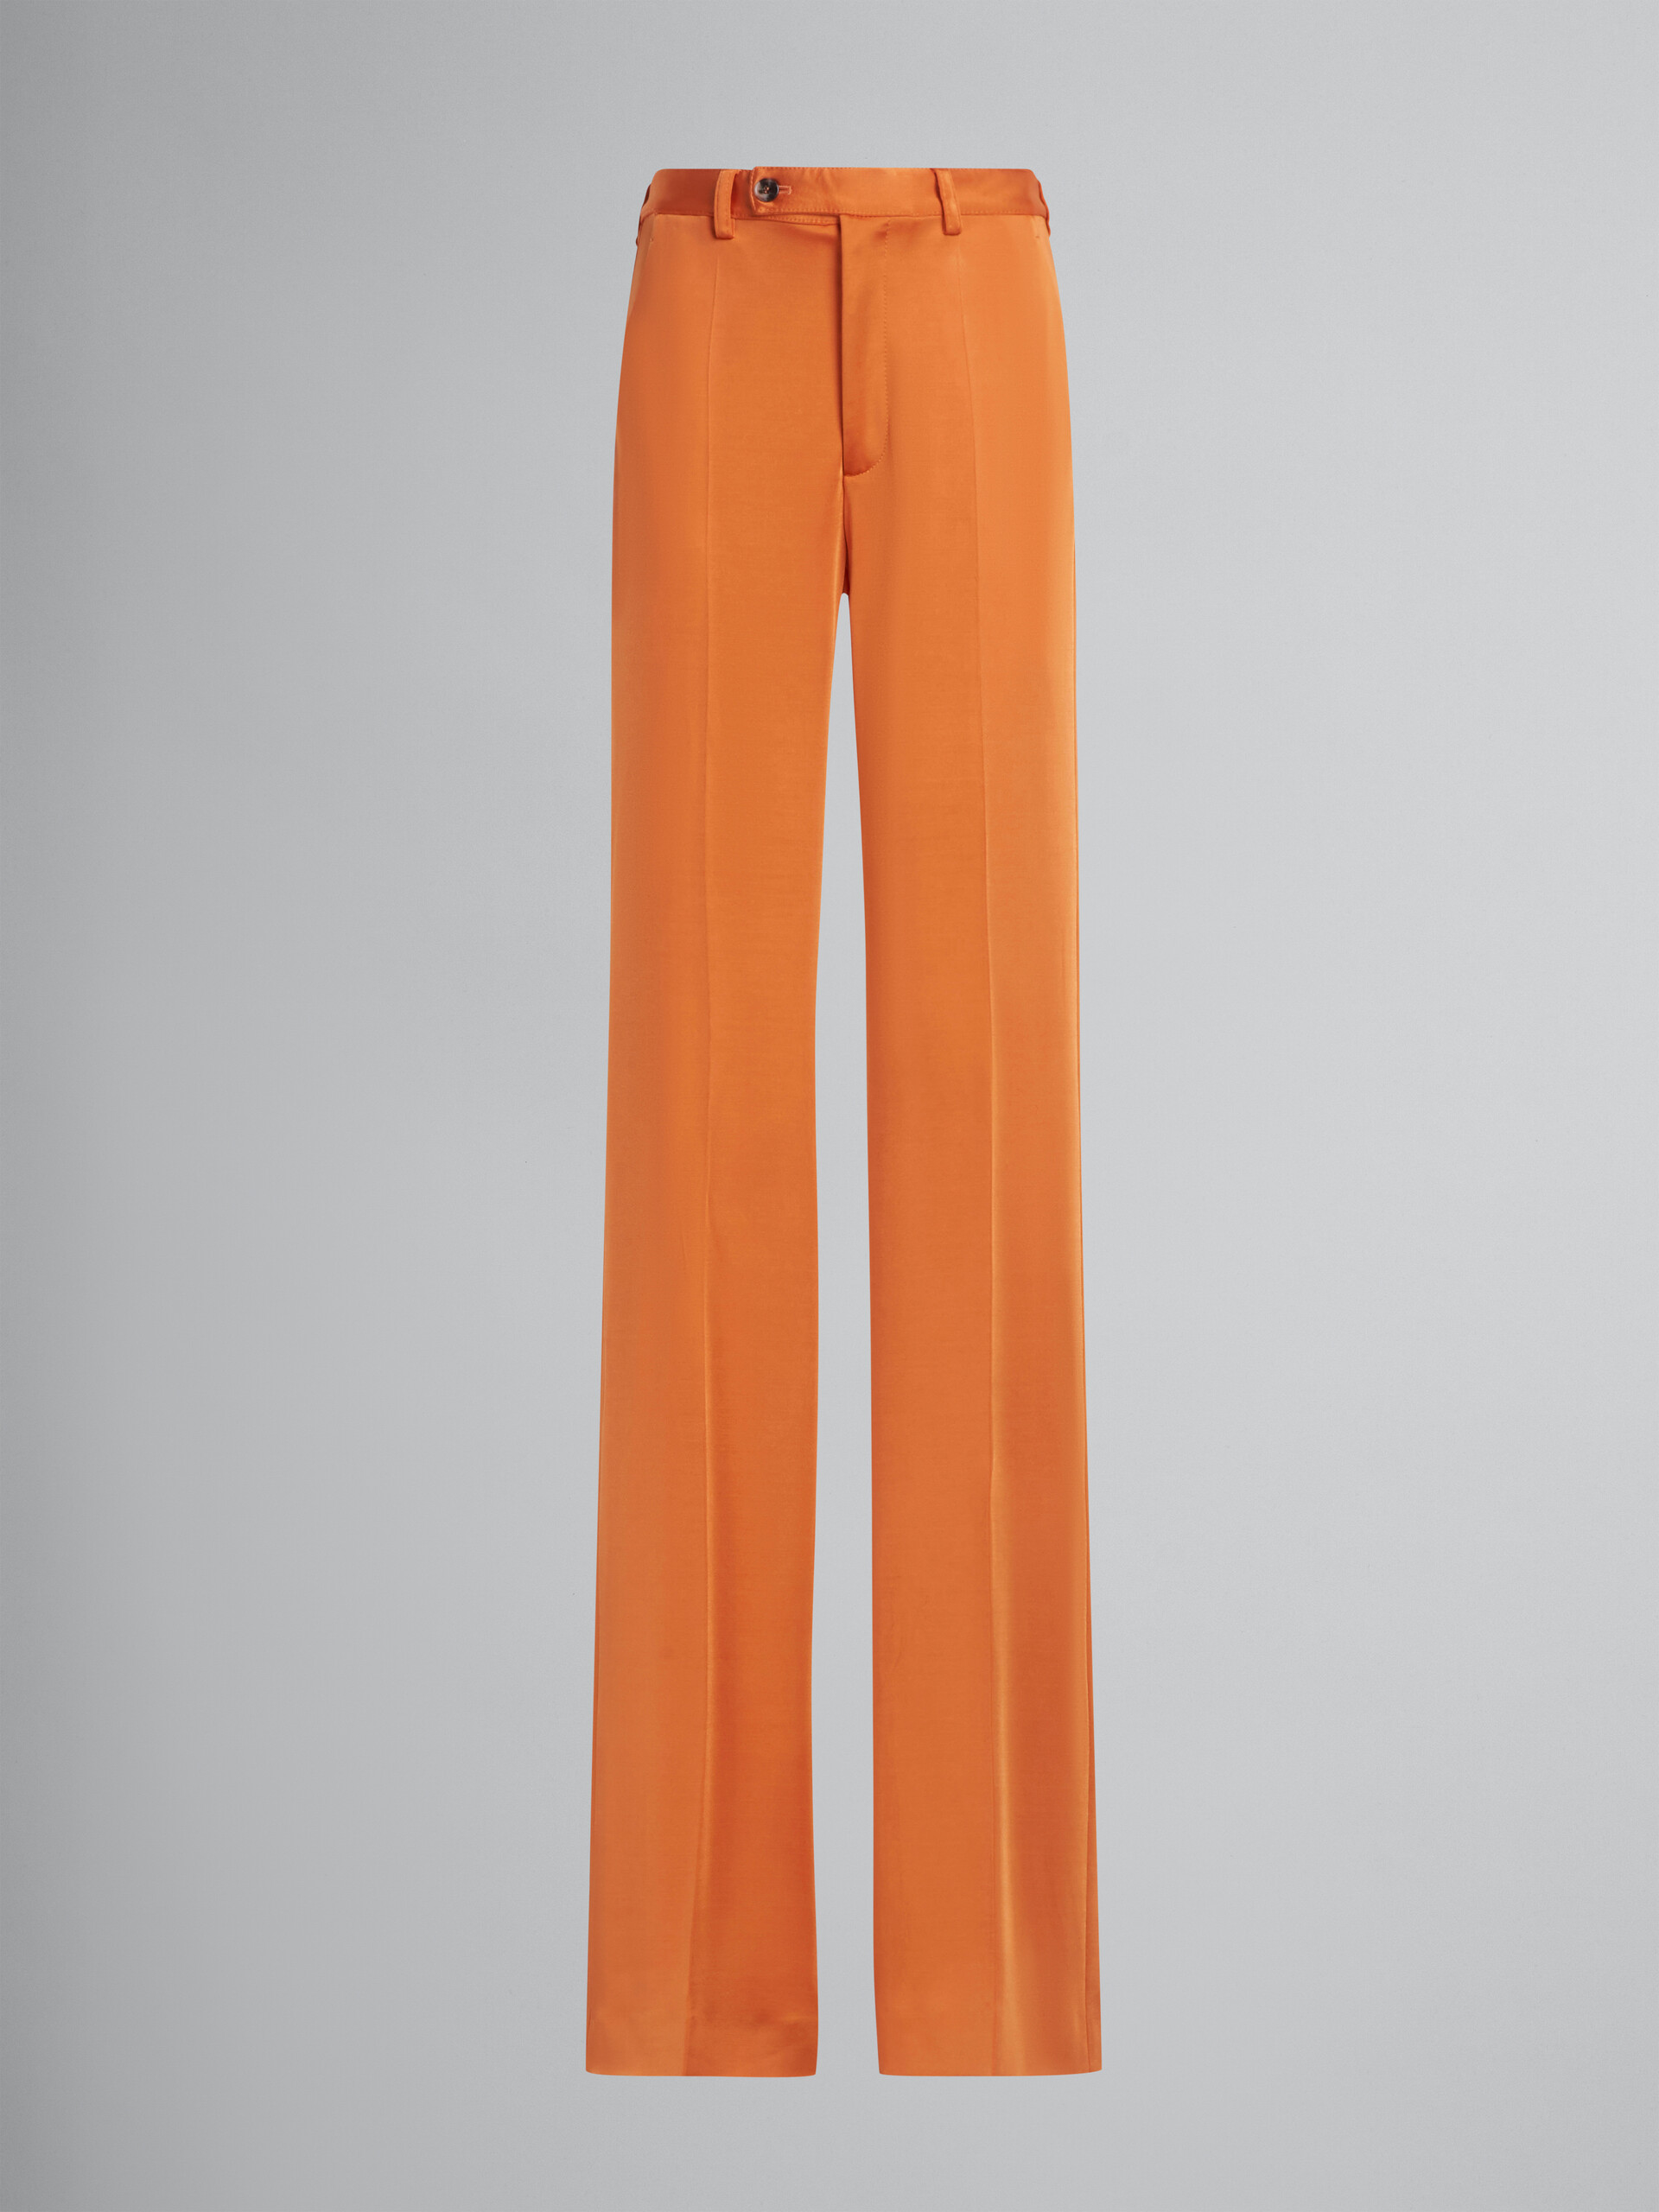 Orange stretch jersey trousers - Pants - Image 1